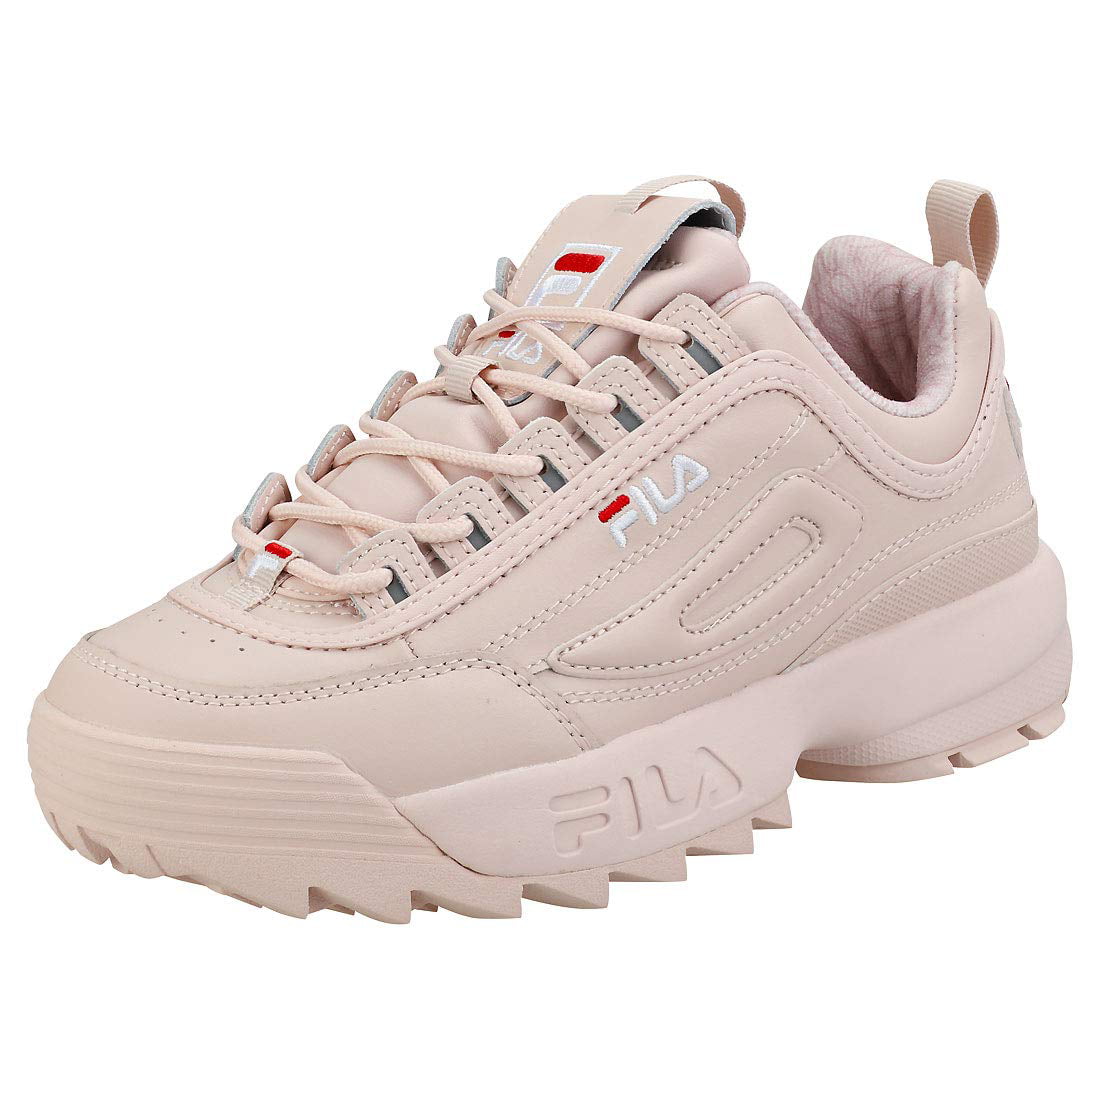 Fila Disruptor Ii Premium Sneakers Peach White/red Walmart.com